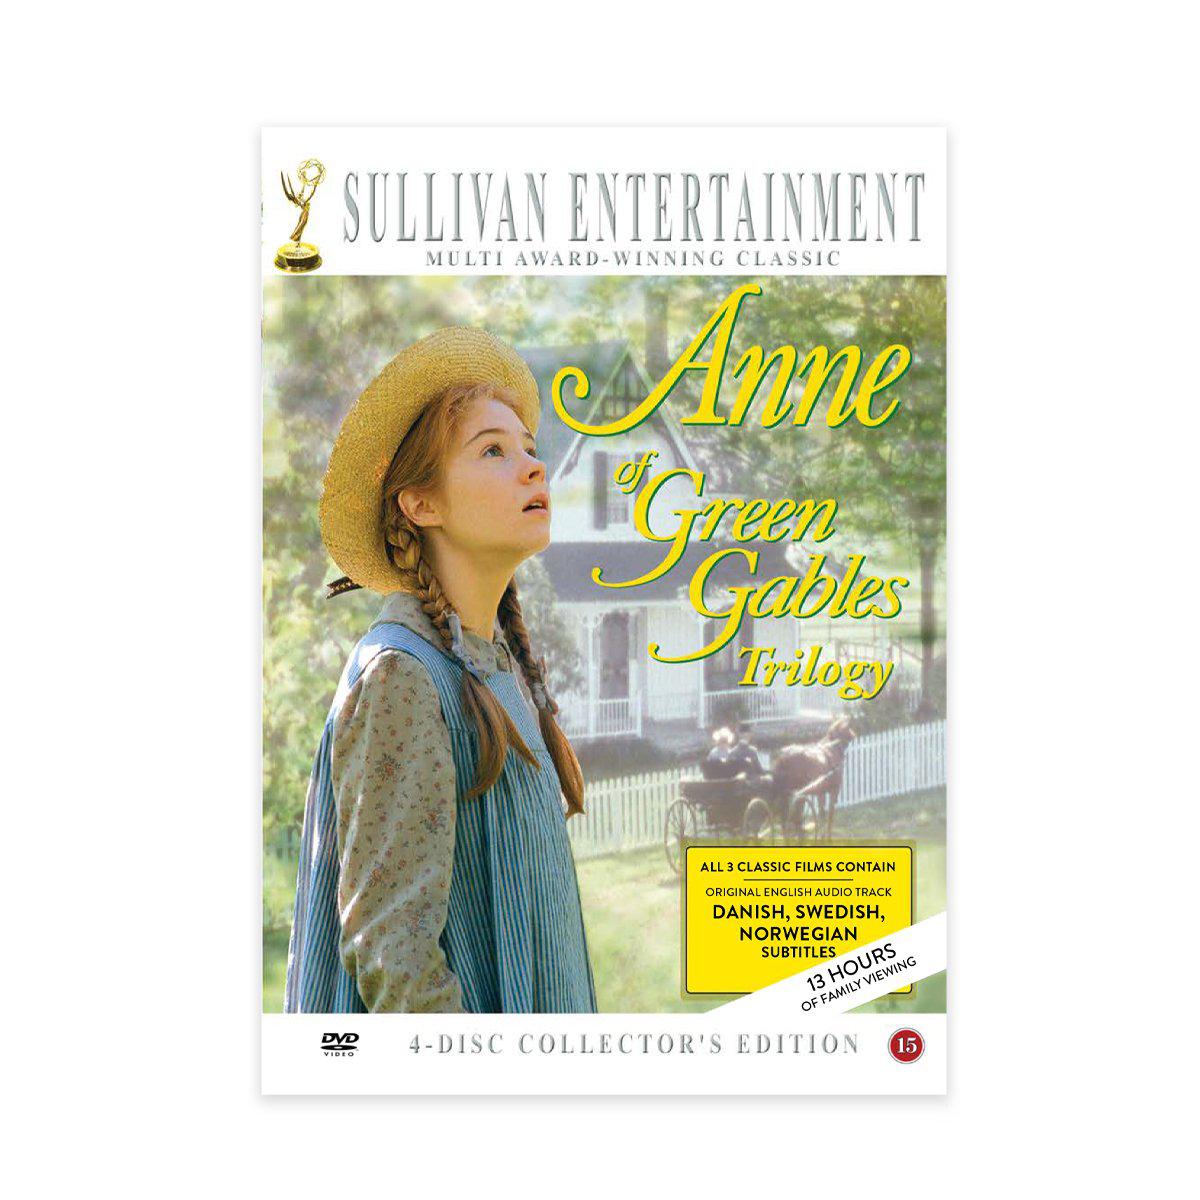 Anne of Green Gables Trilogy-Scandinavian subtitled DVD